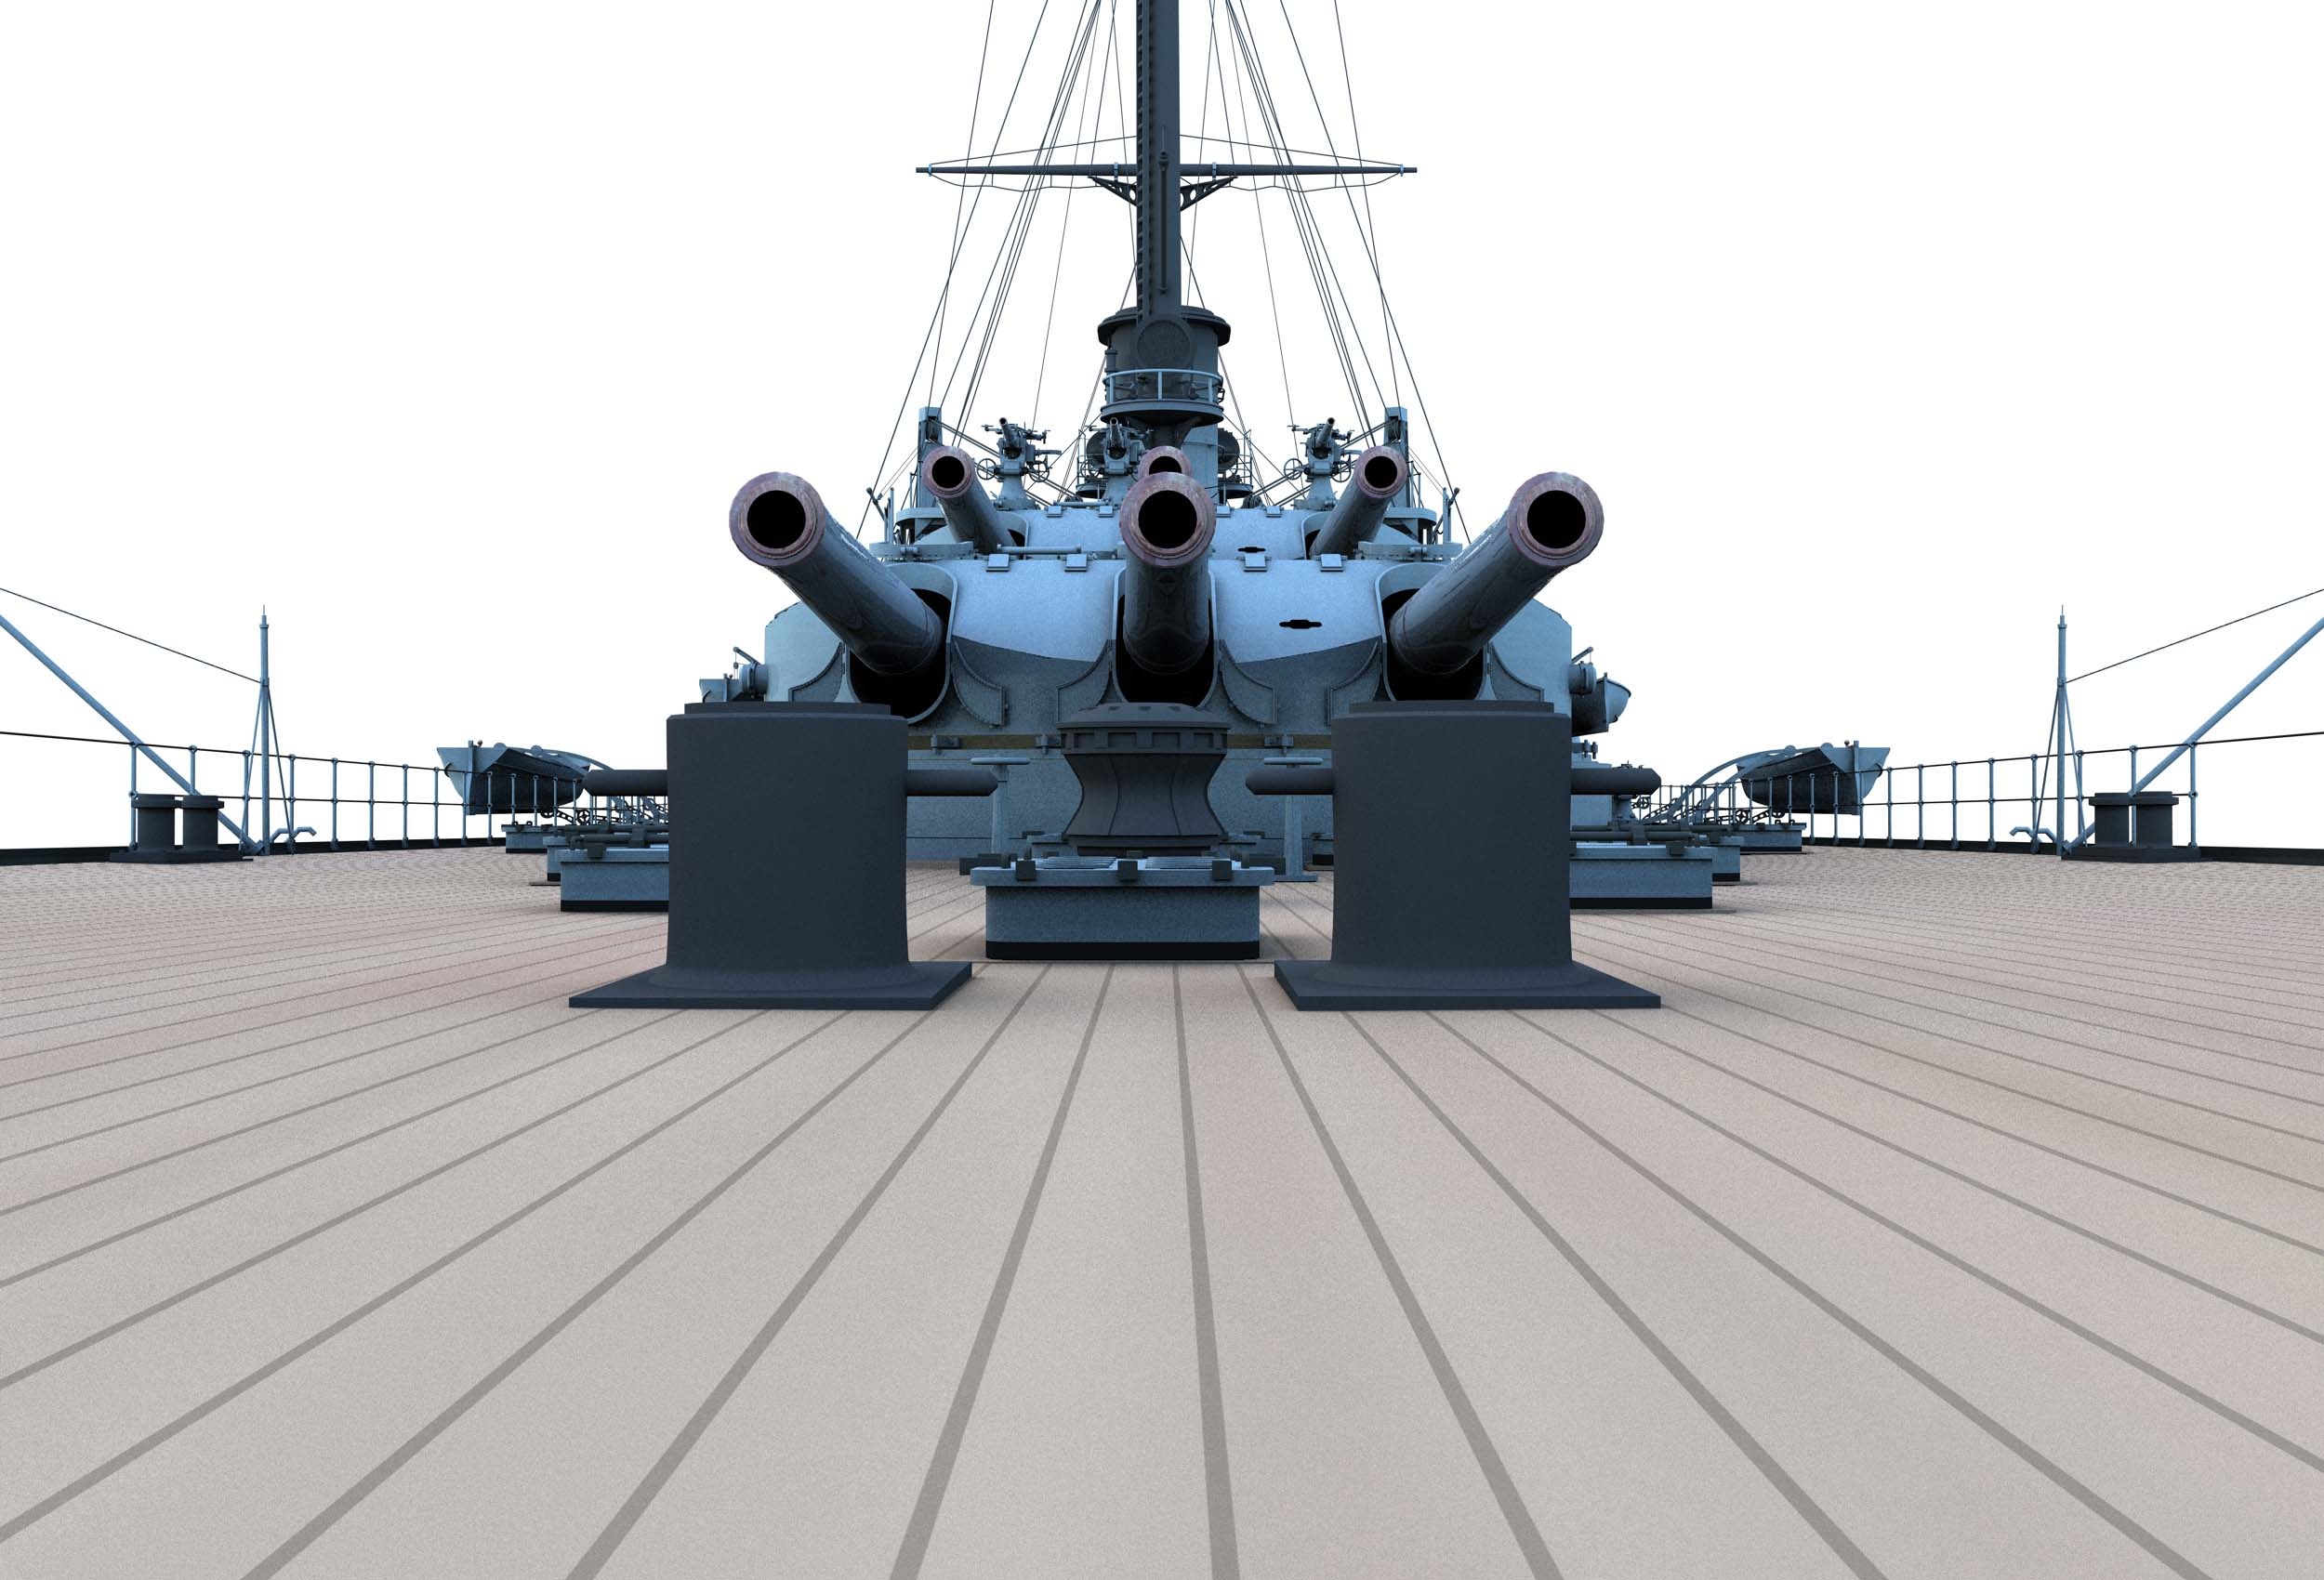 https://0901.nccdn.net/4_2/000/000/046/6ea/CK30-Parial-Ship-Stern-Deck-Level-Forward-Turrets-III-and-IV-2500x1700.jpg